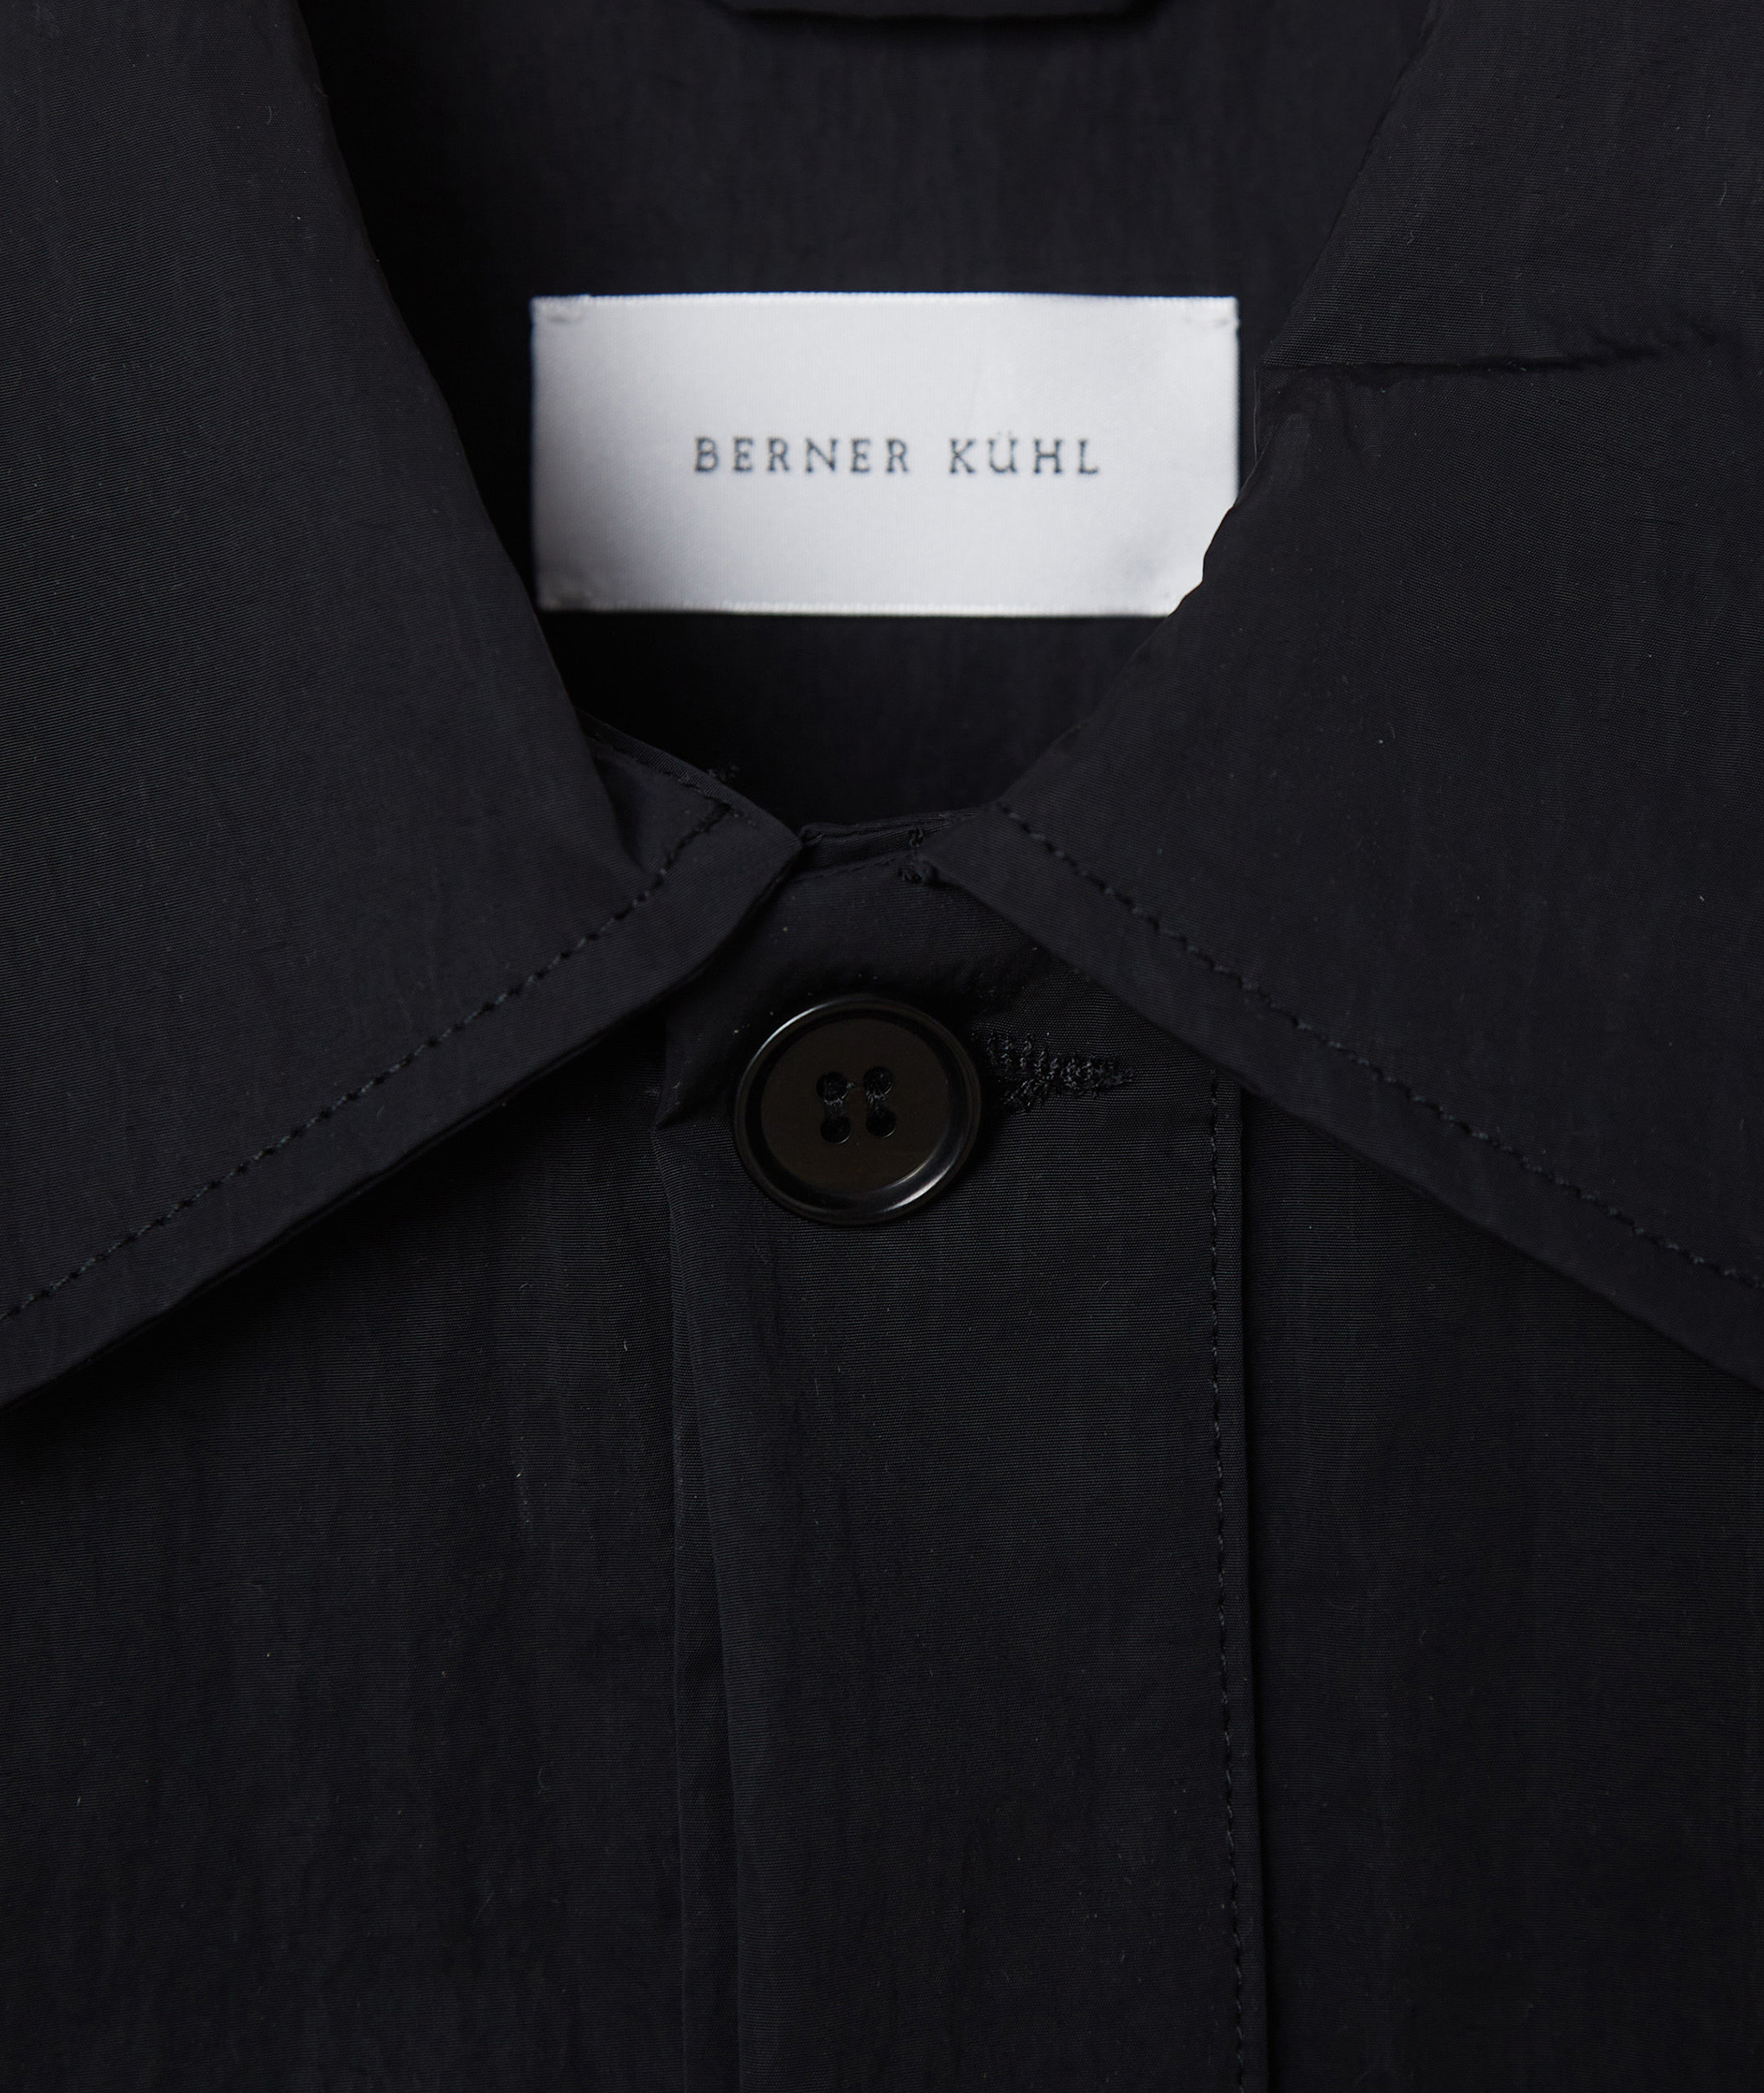 Norse Store | Shirt Kühl - Paint Worldwide - Berner Shipping Black